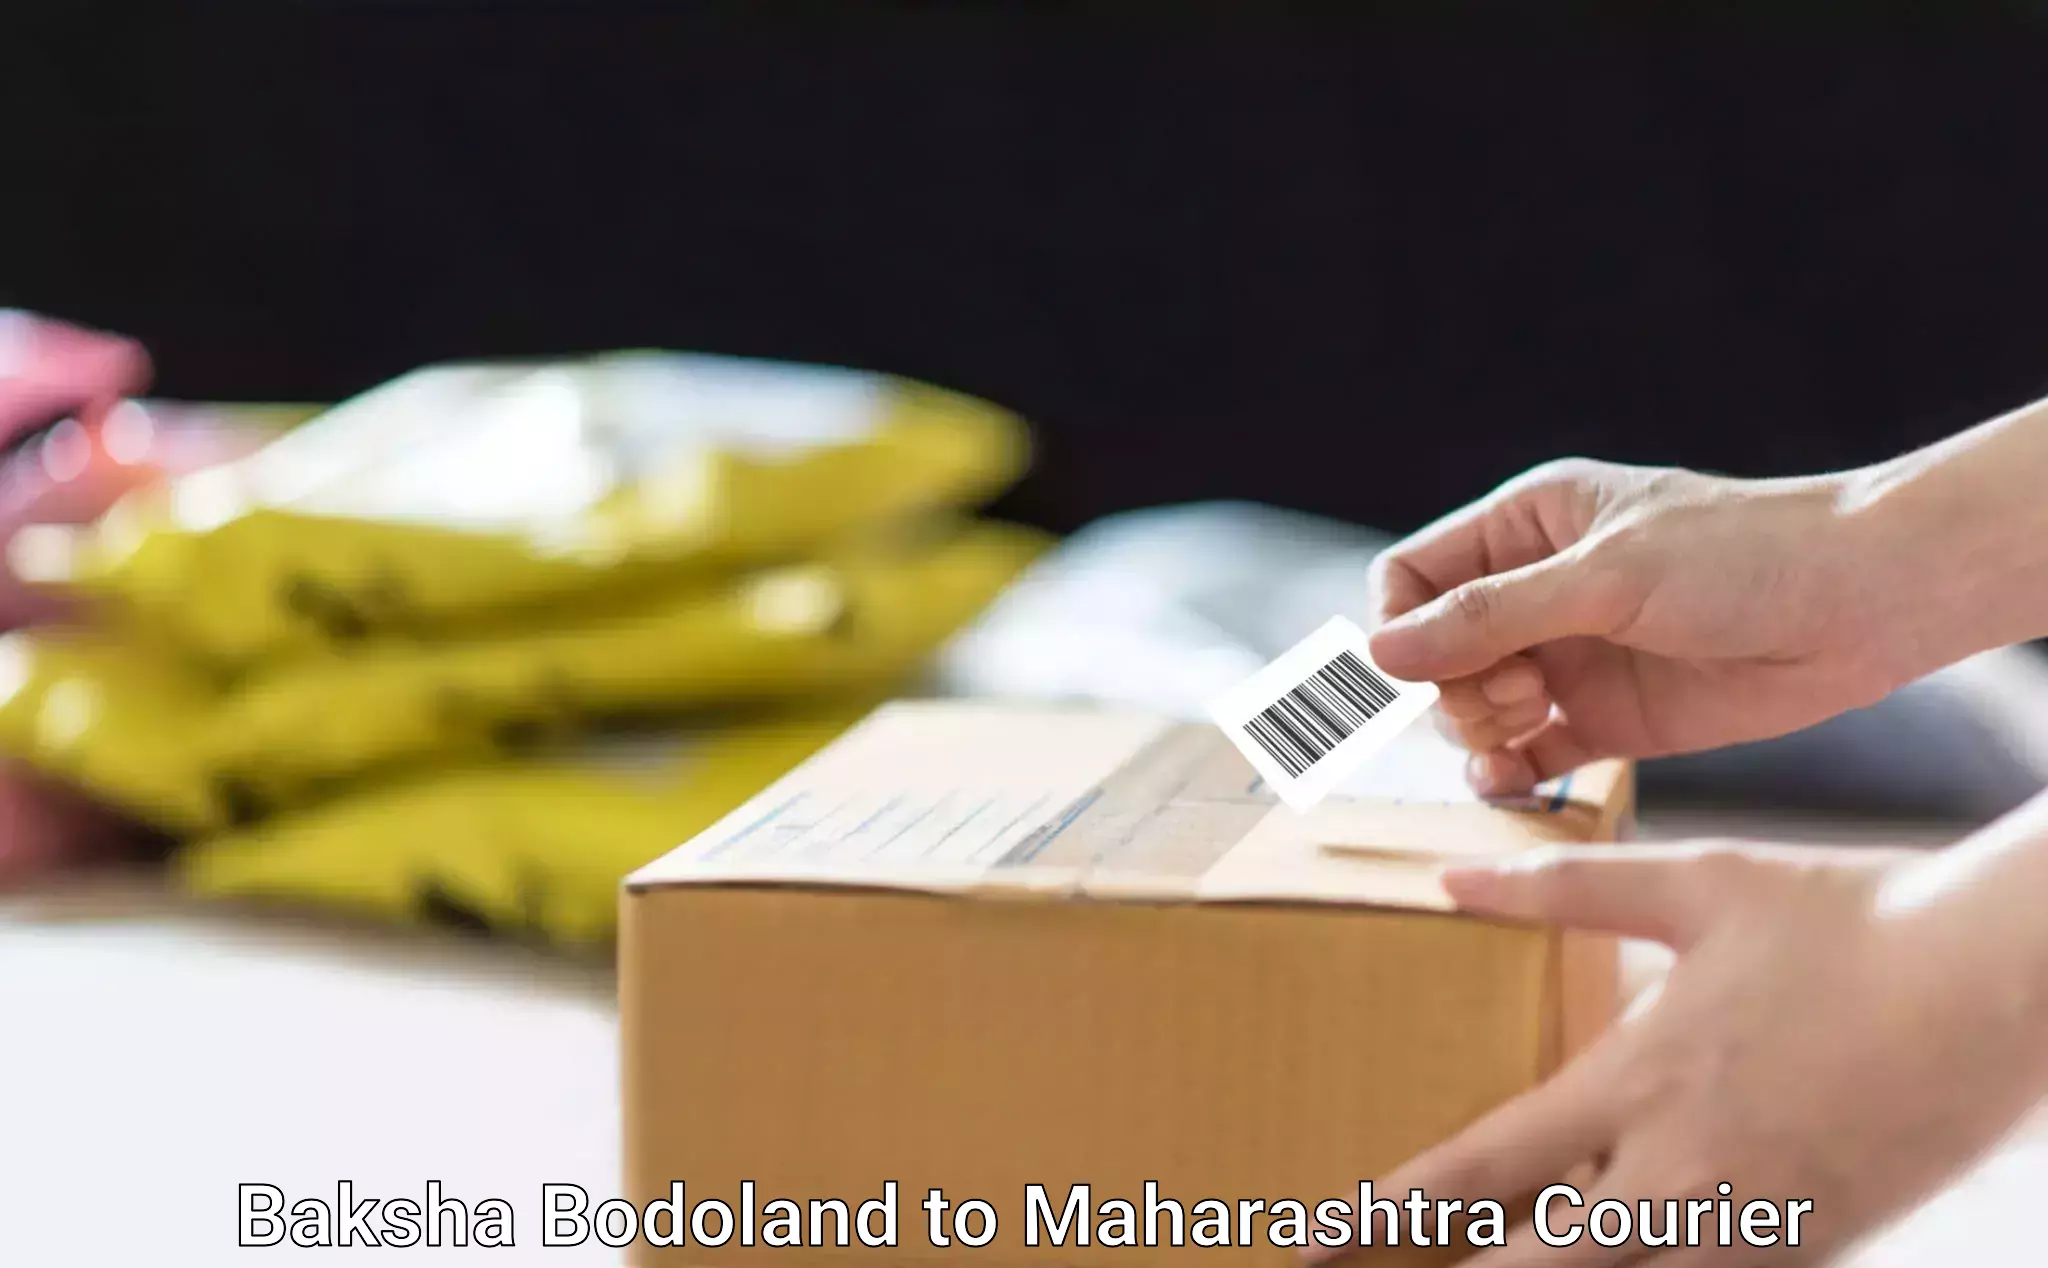 Customized delivery options Baksha Bodoland to Maharashtra